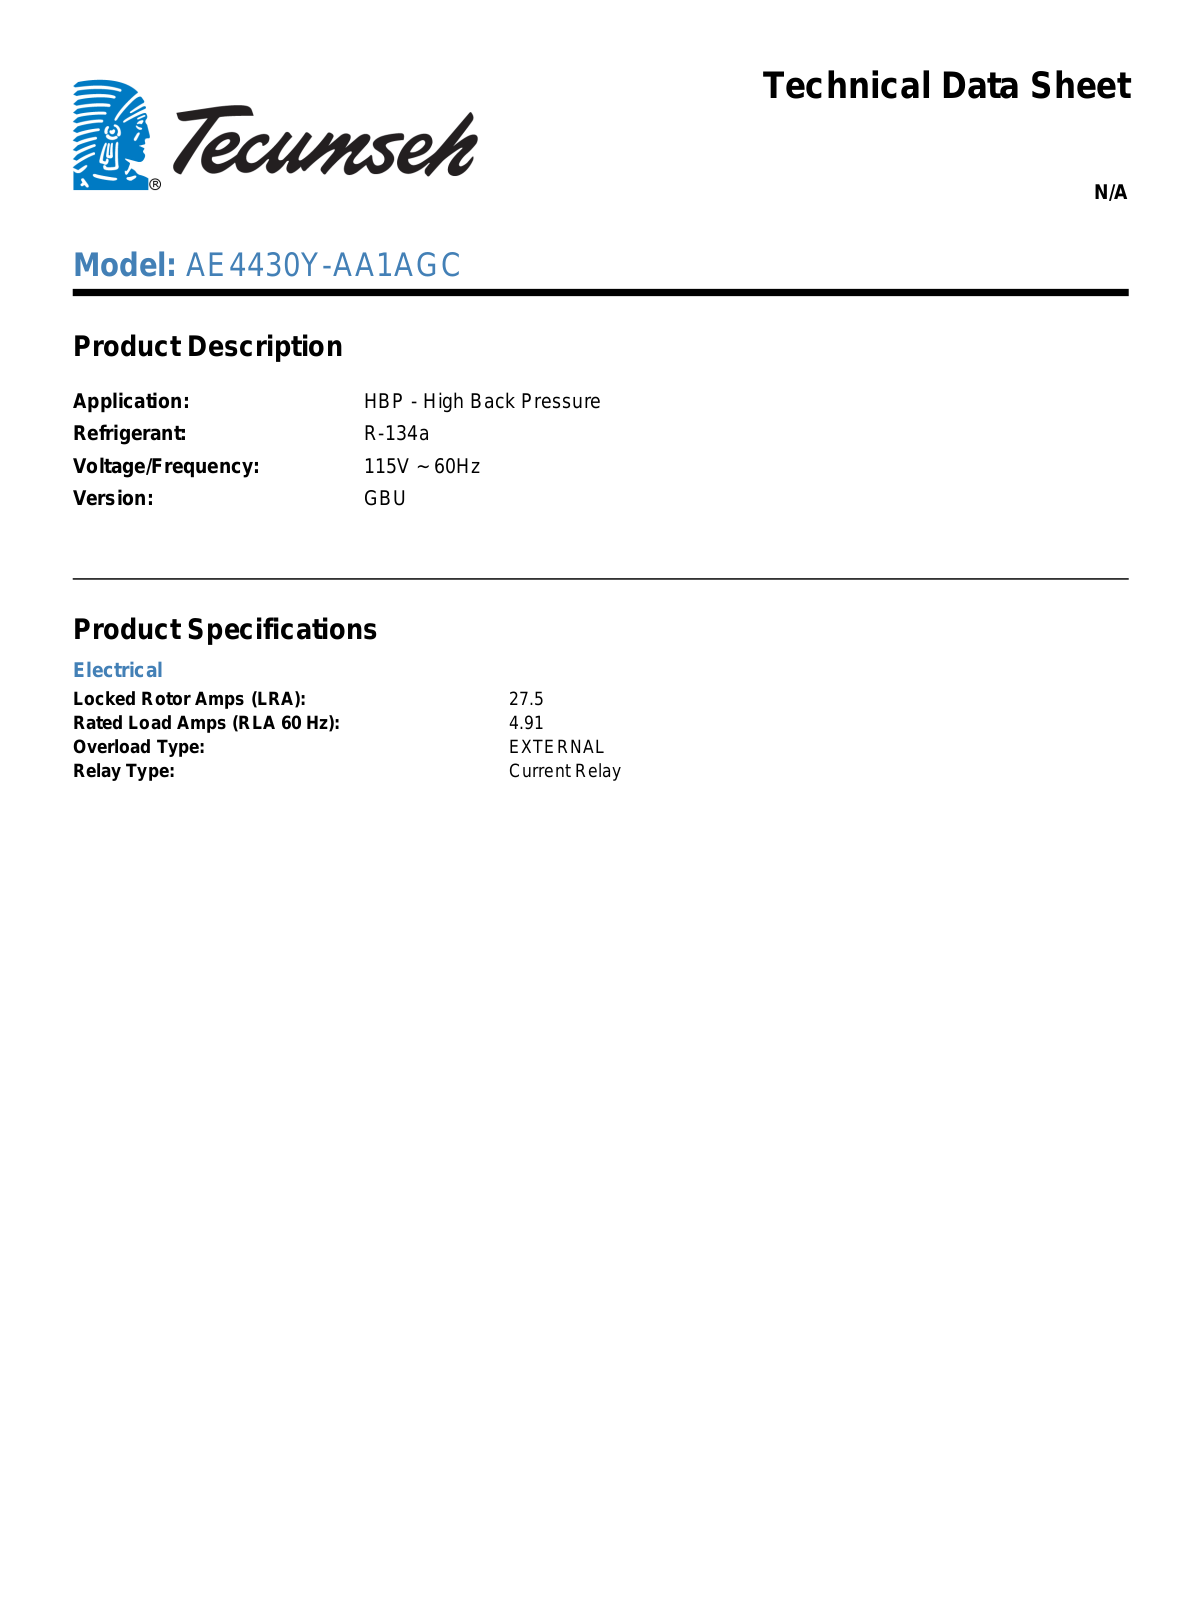 Tecumseh AE4430Y-AA1AGC User Manual